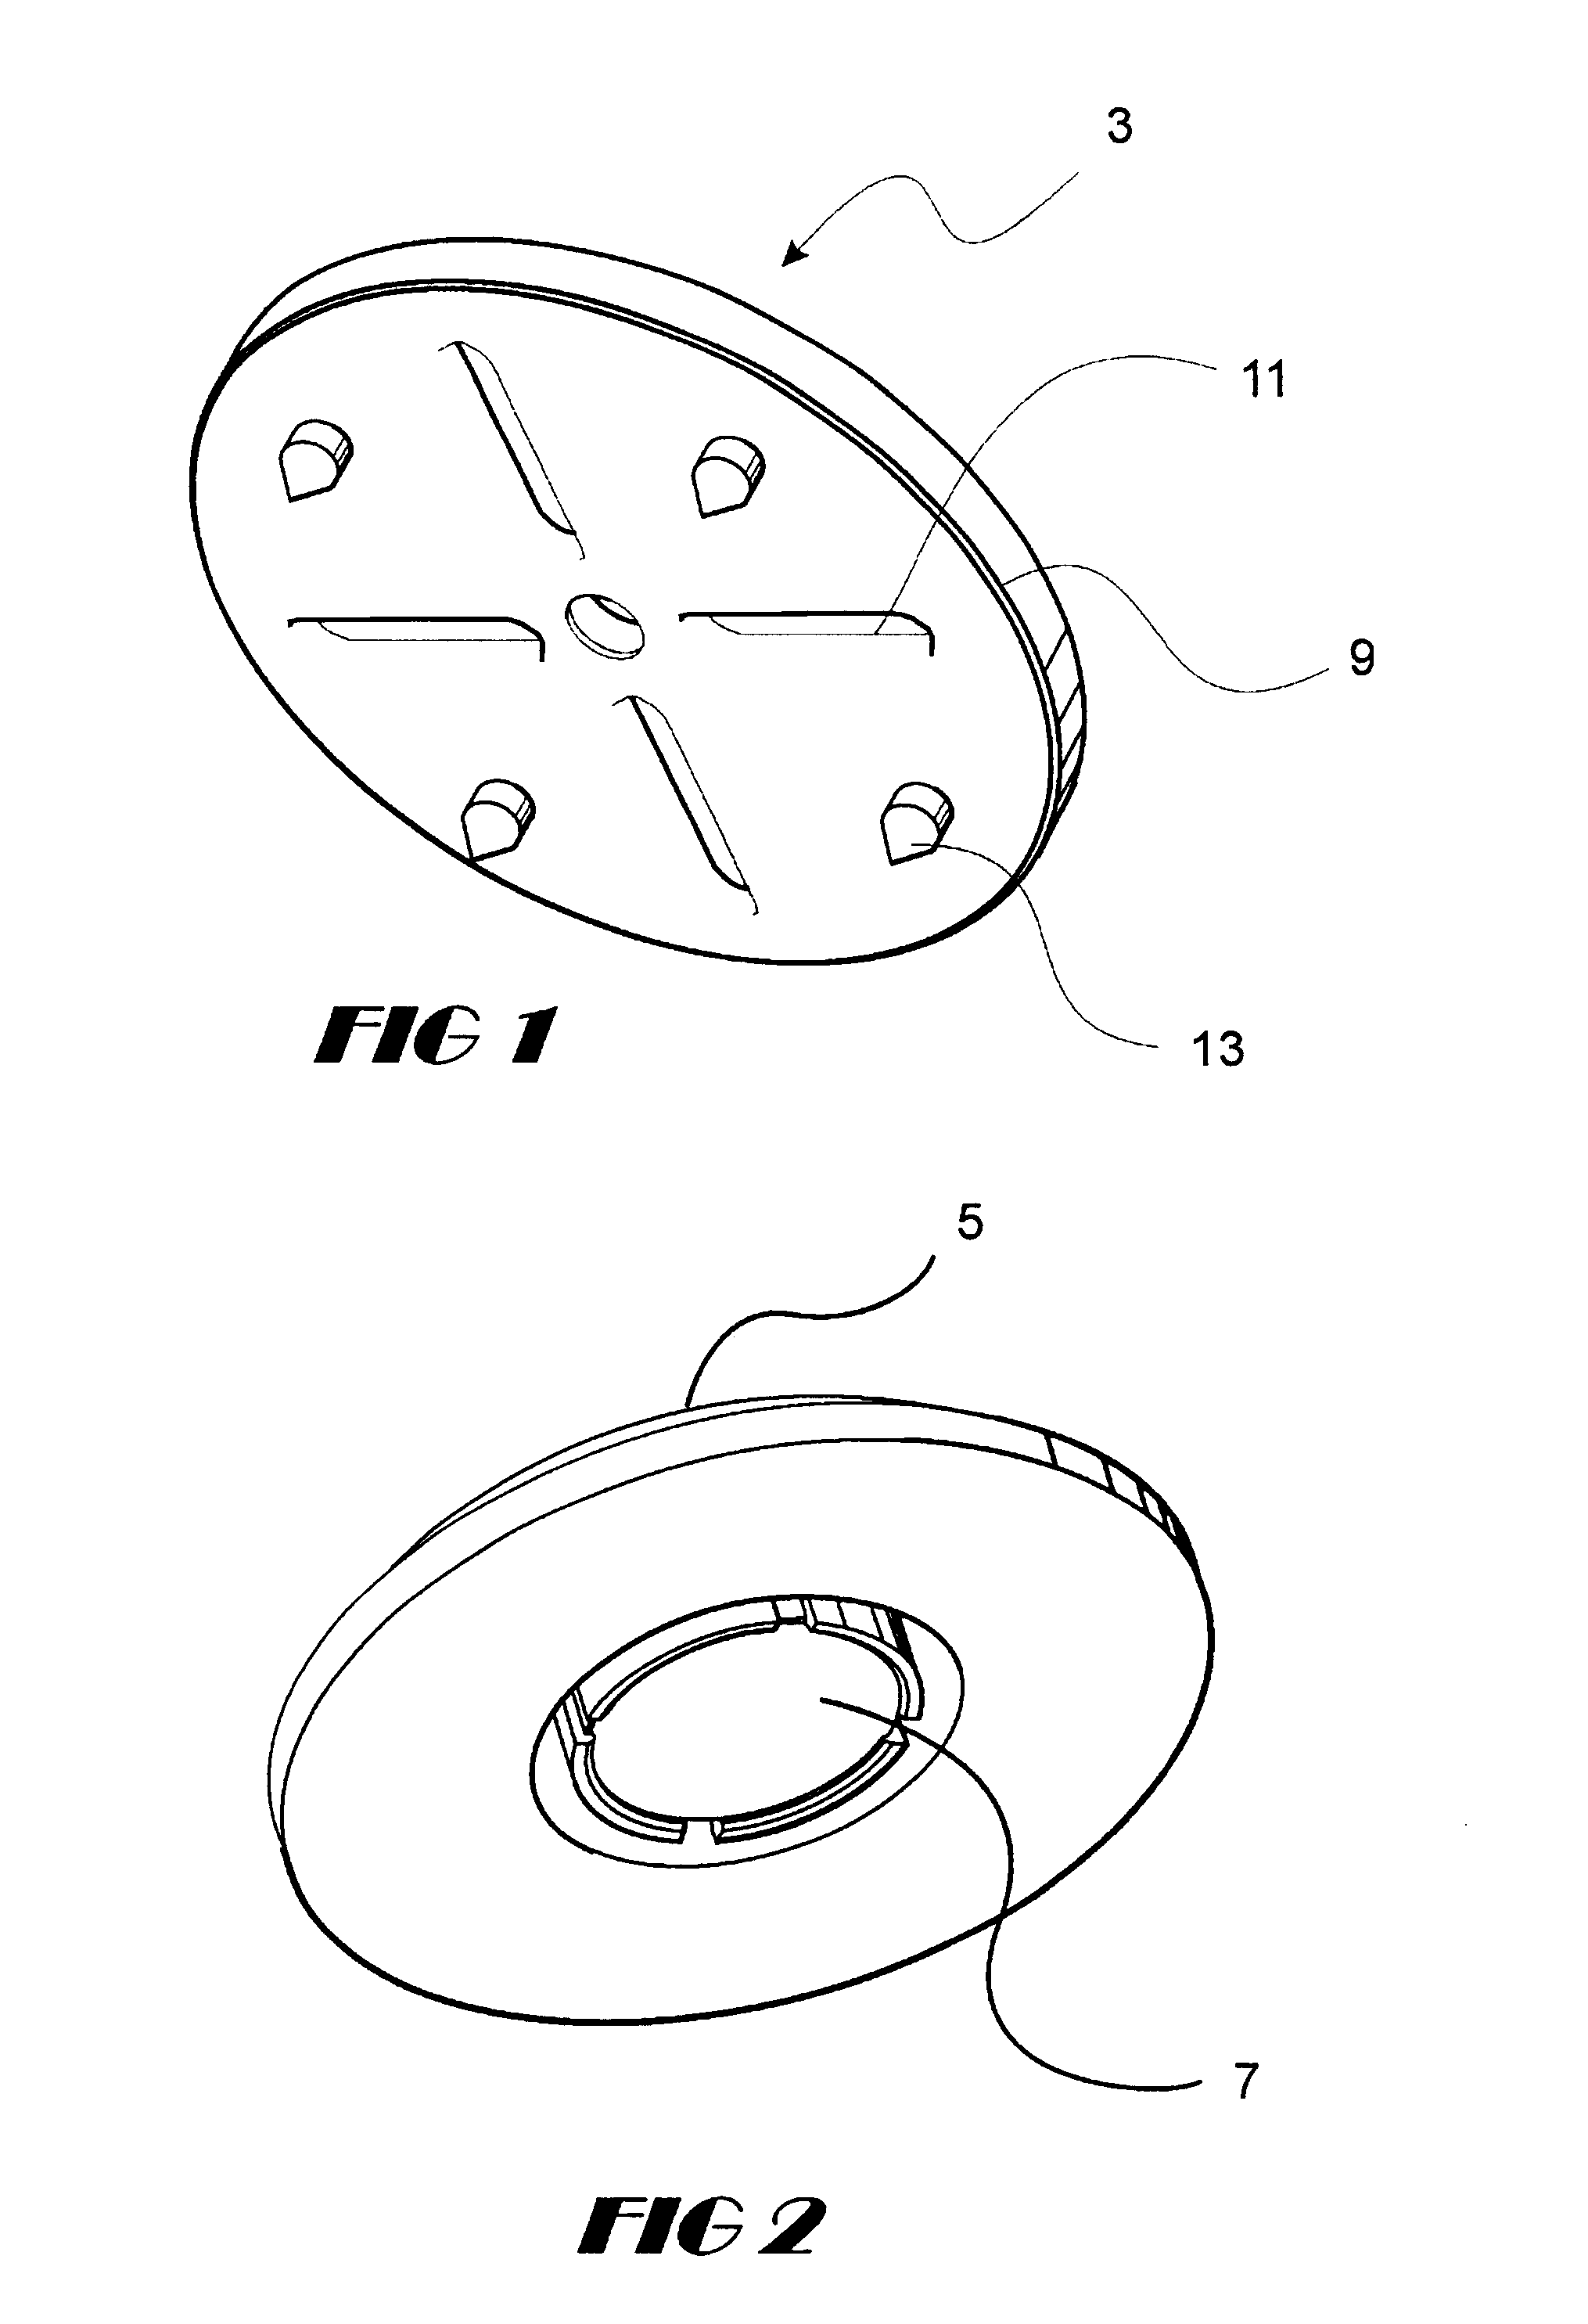 Patellar alignment device